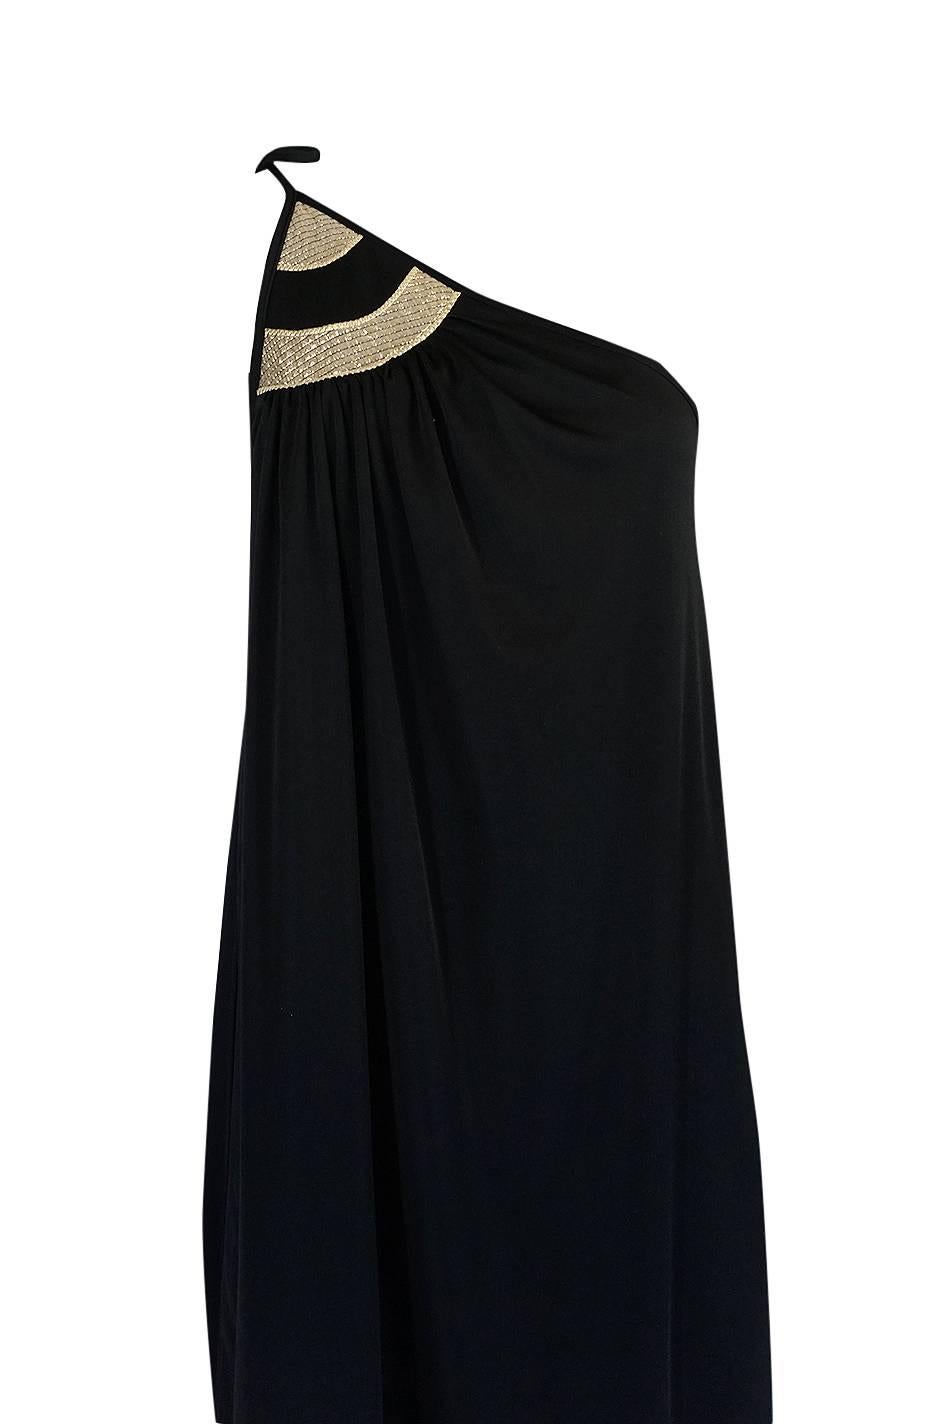 1970s Bill Tice One Shoulder Gold & Black Jersey Dress 2